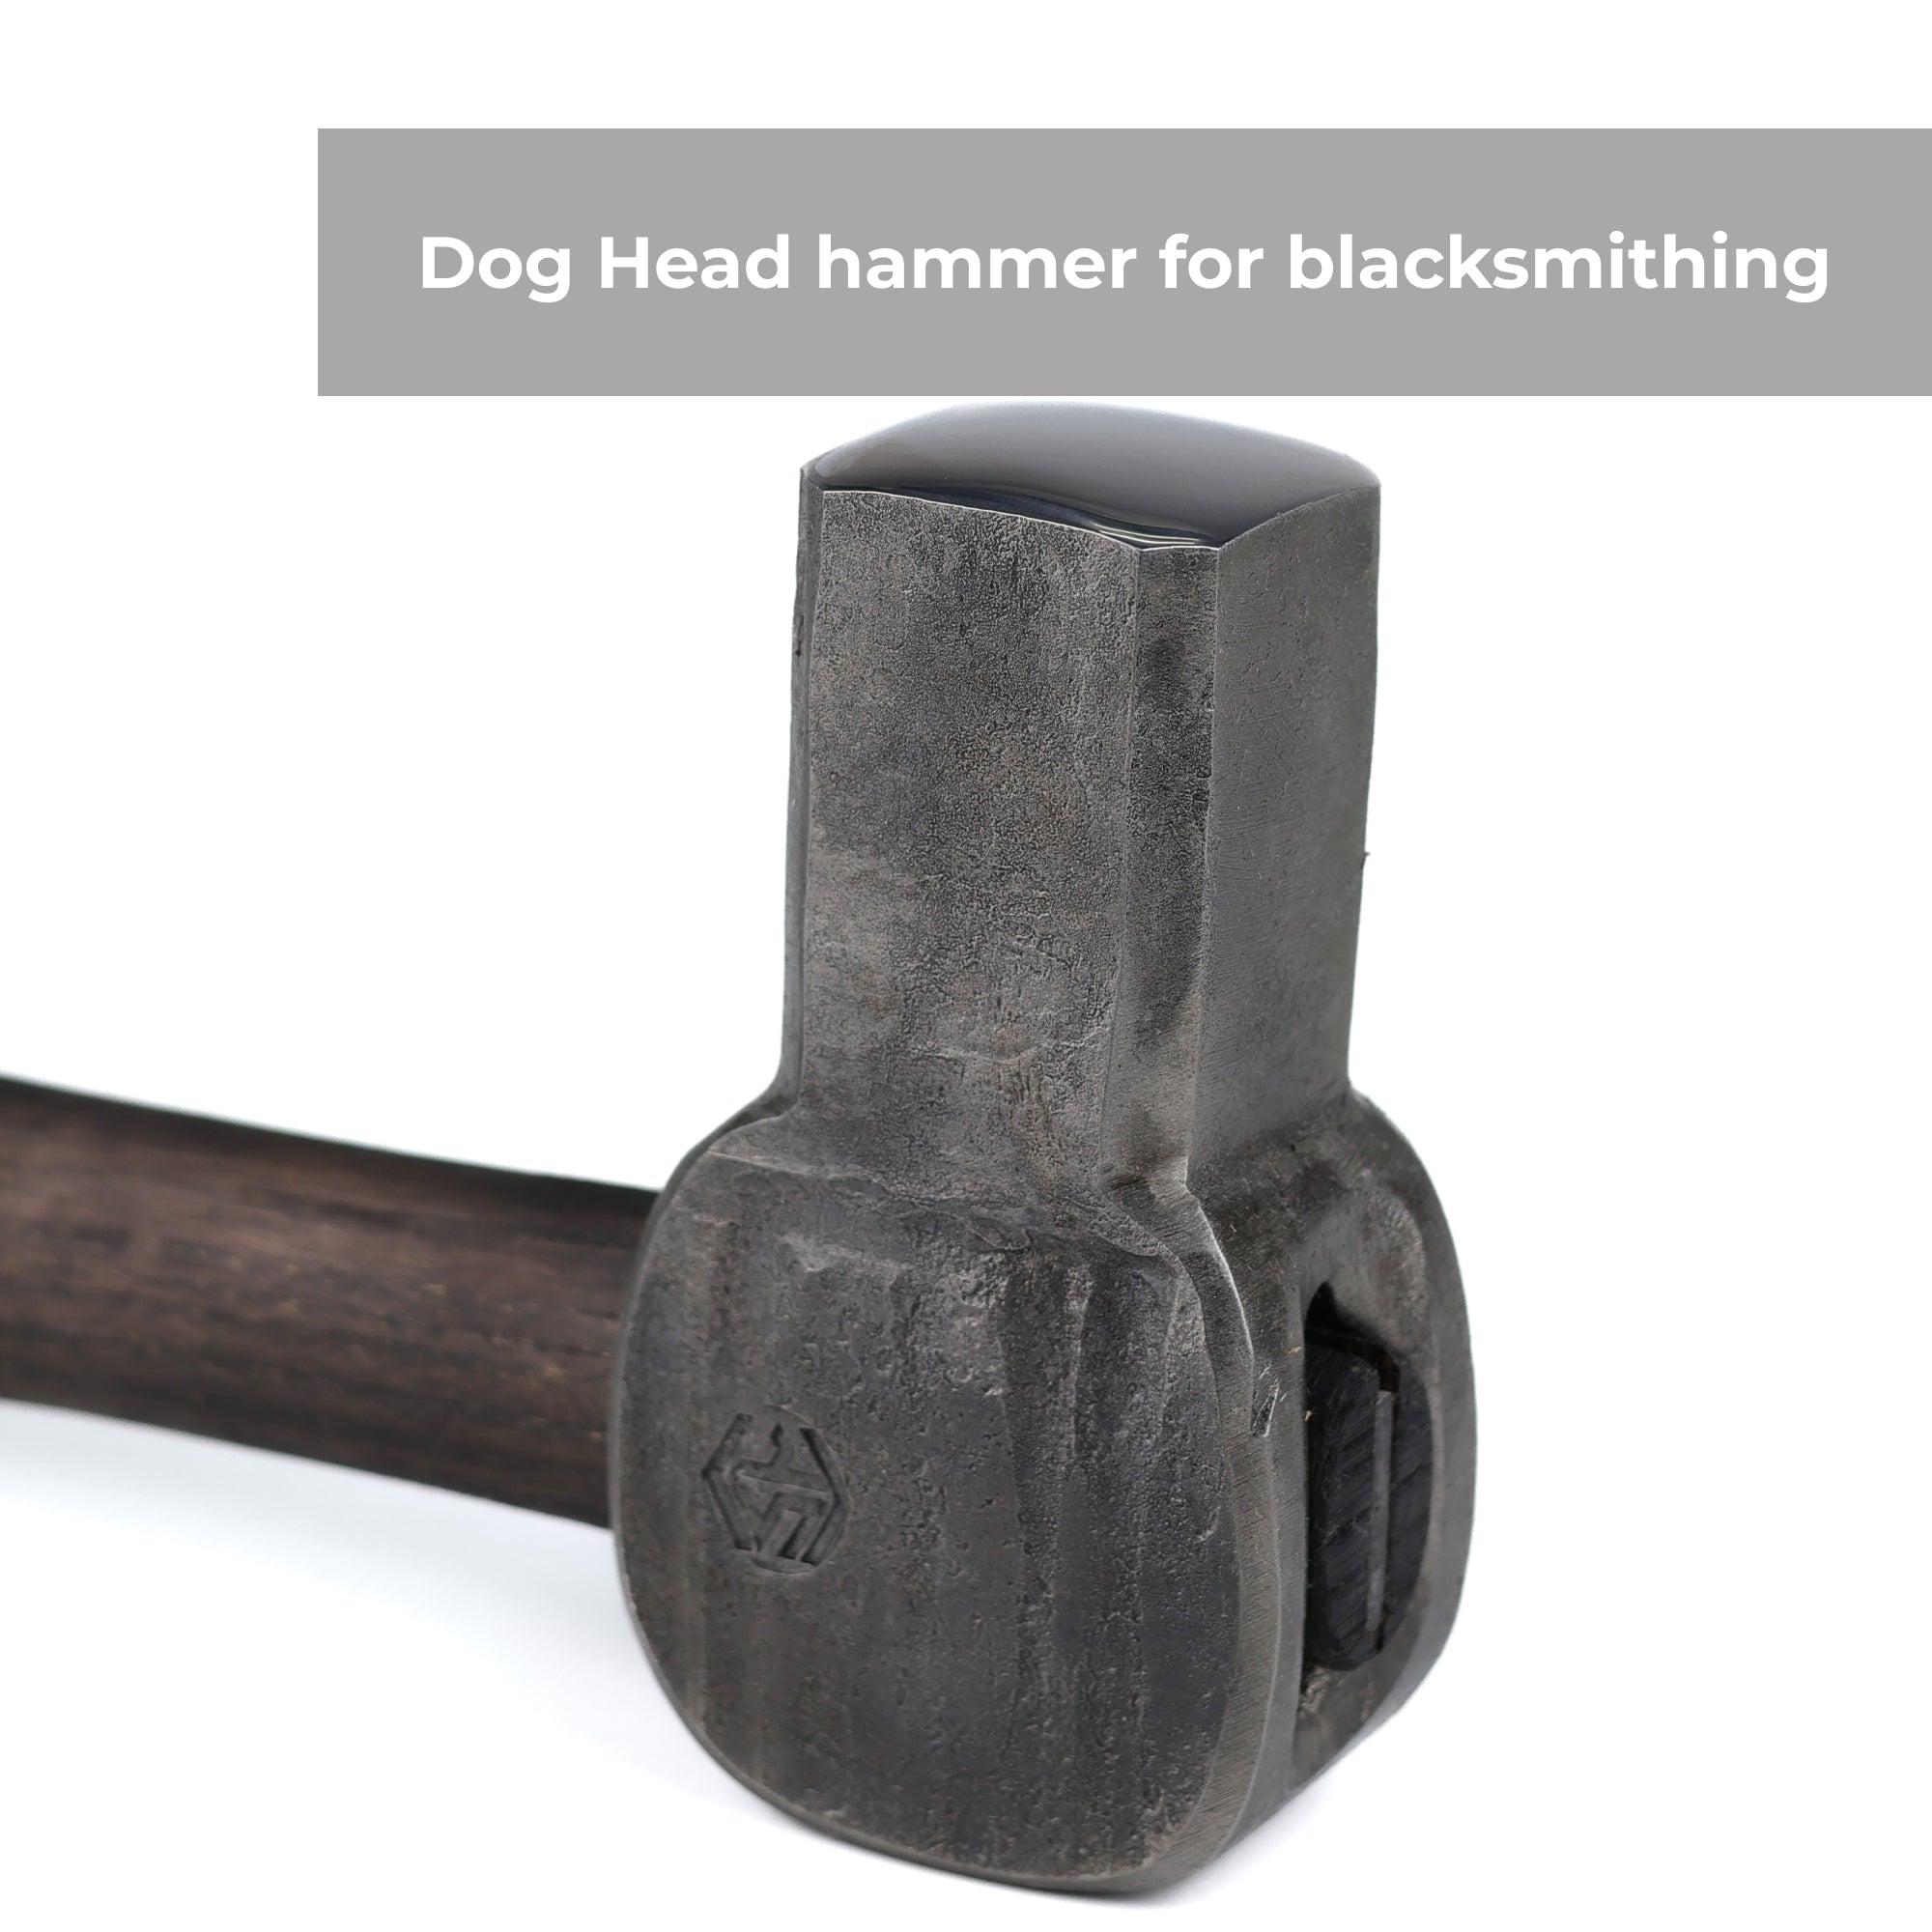 Dog Head hammer for blacksmith